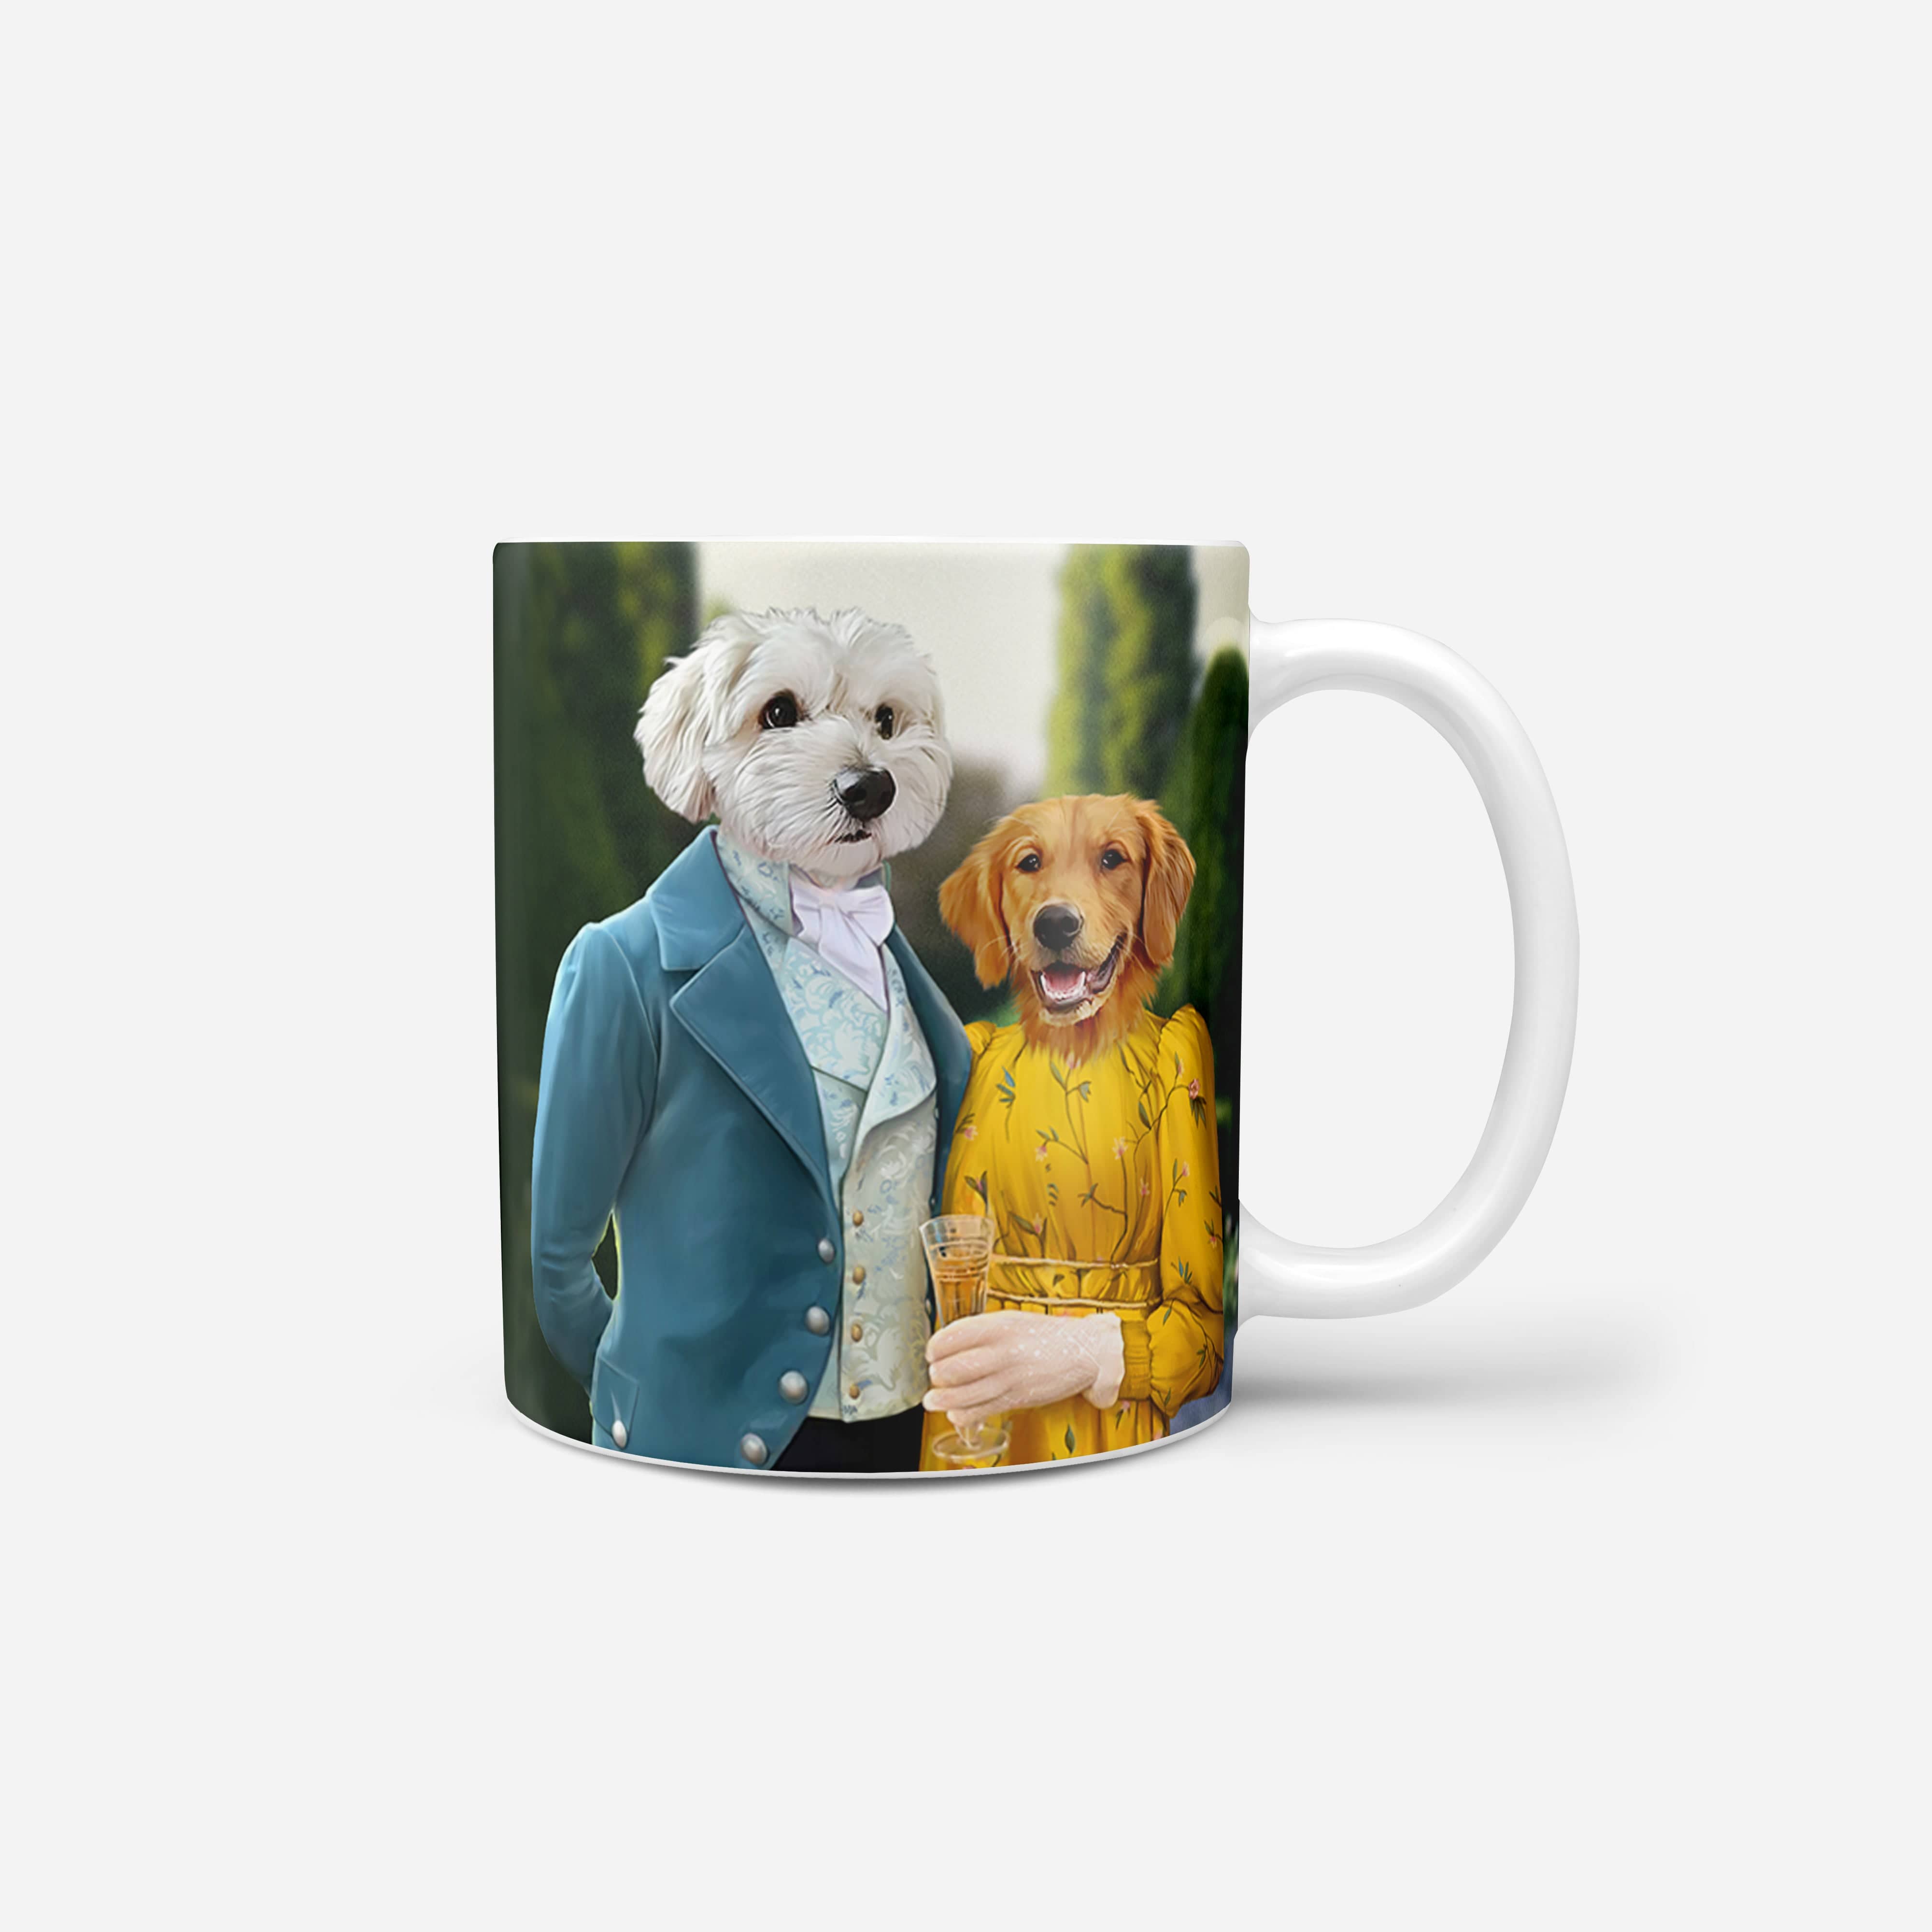 Colin and Marina - Custom Mug